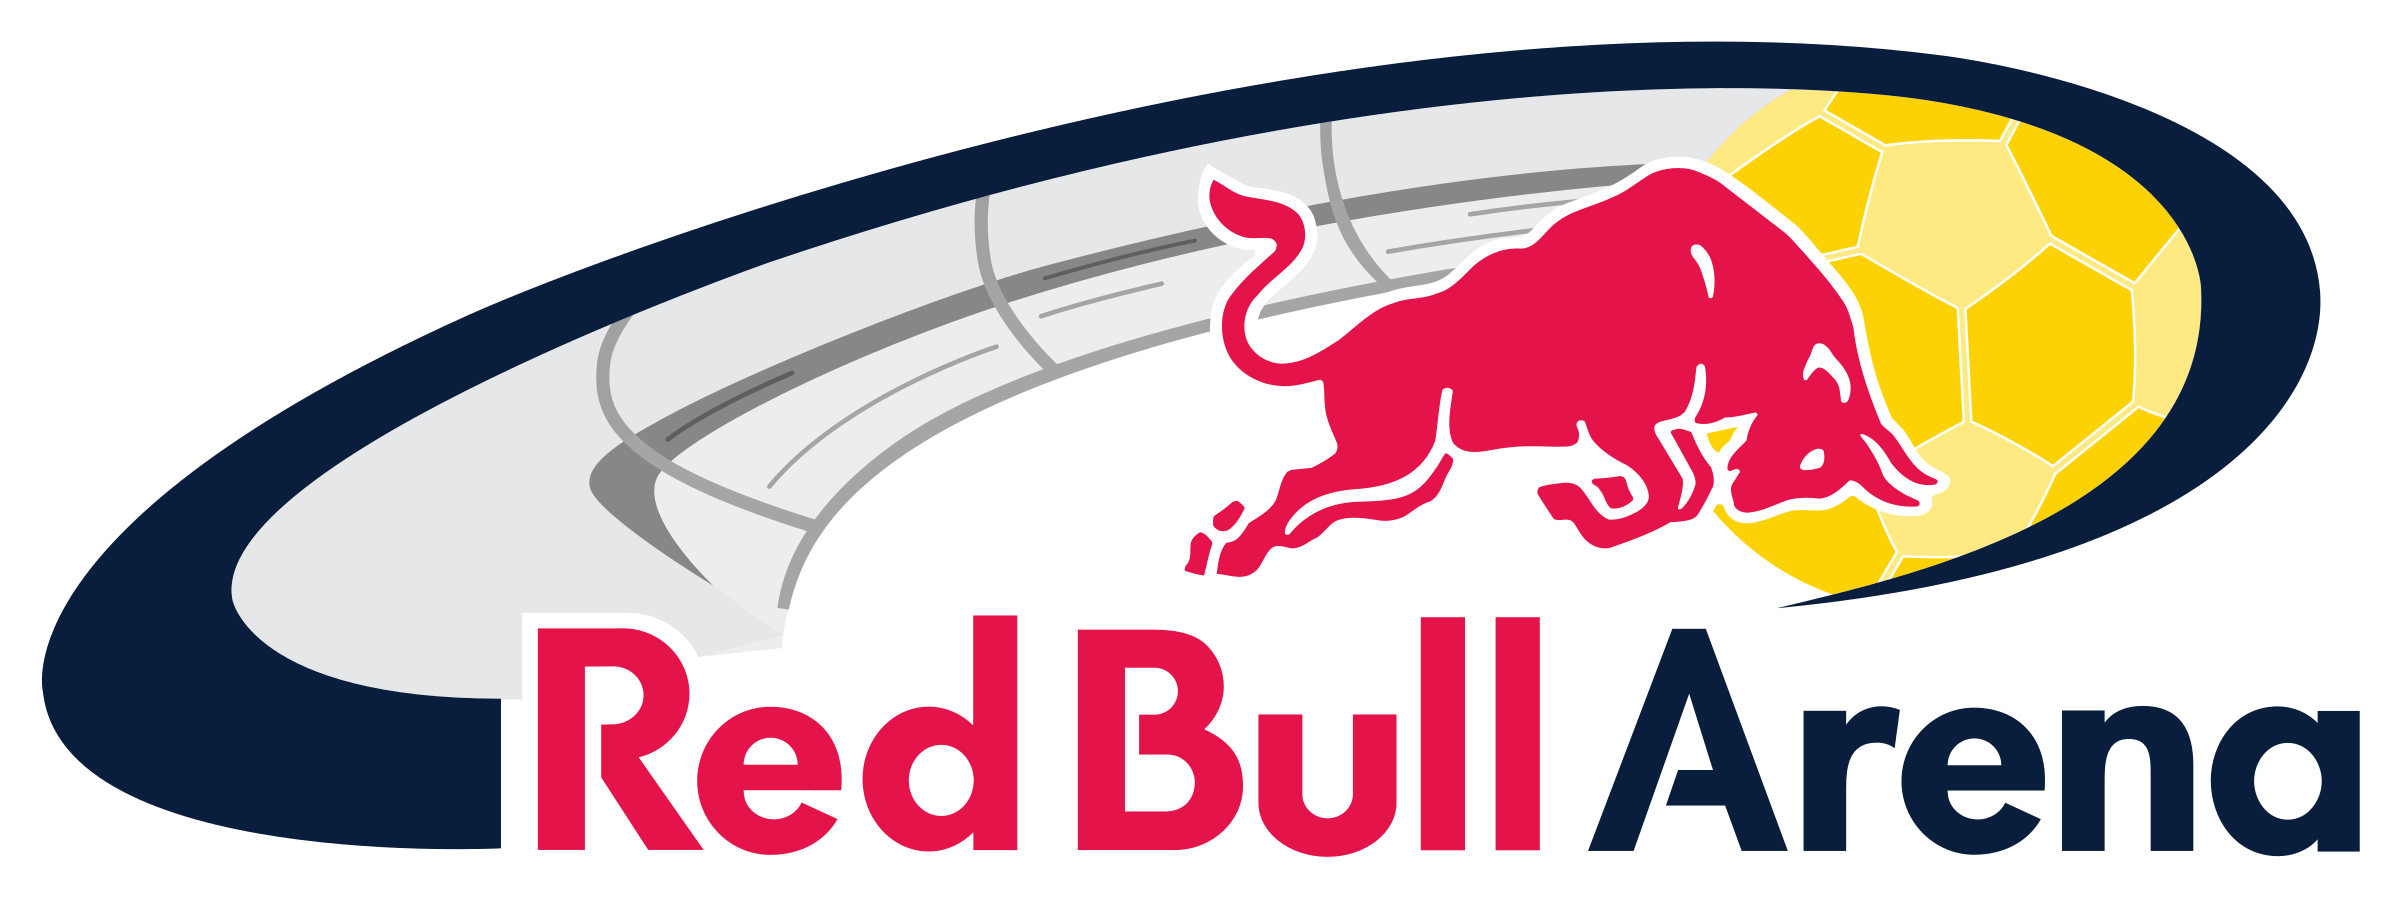 Arena Logo - Red Bull Arena Logo PNG Transparent & SVG Vector